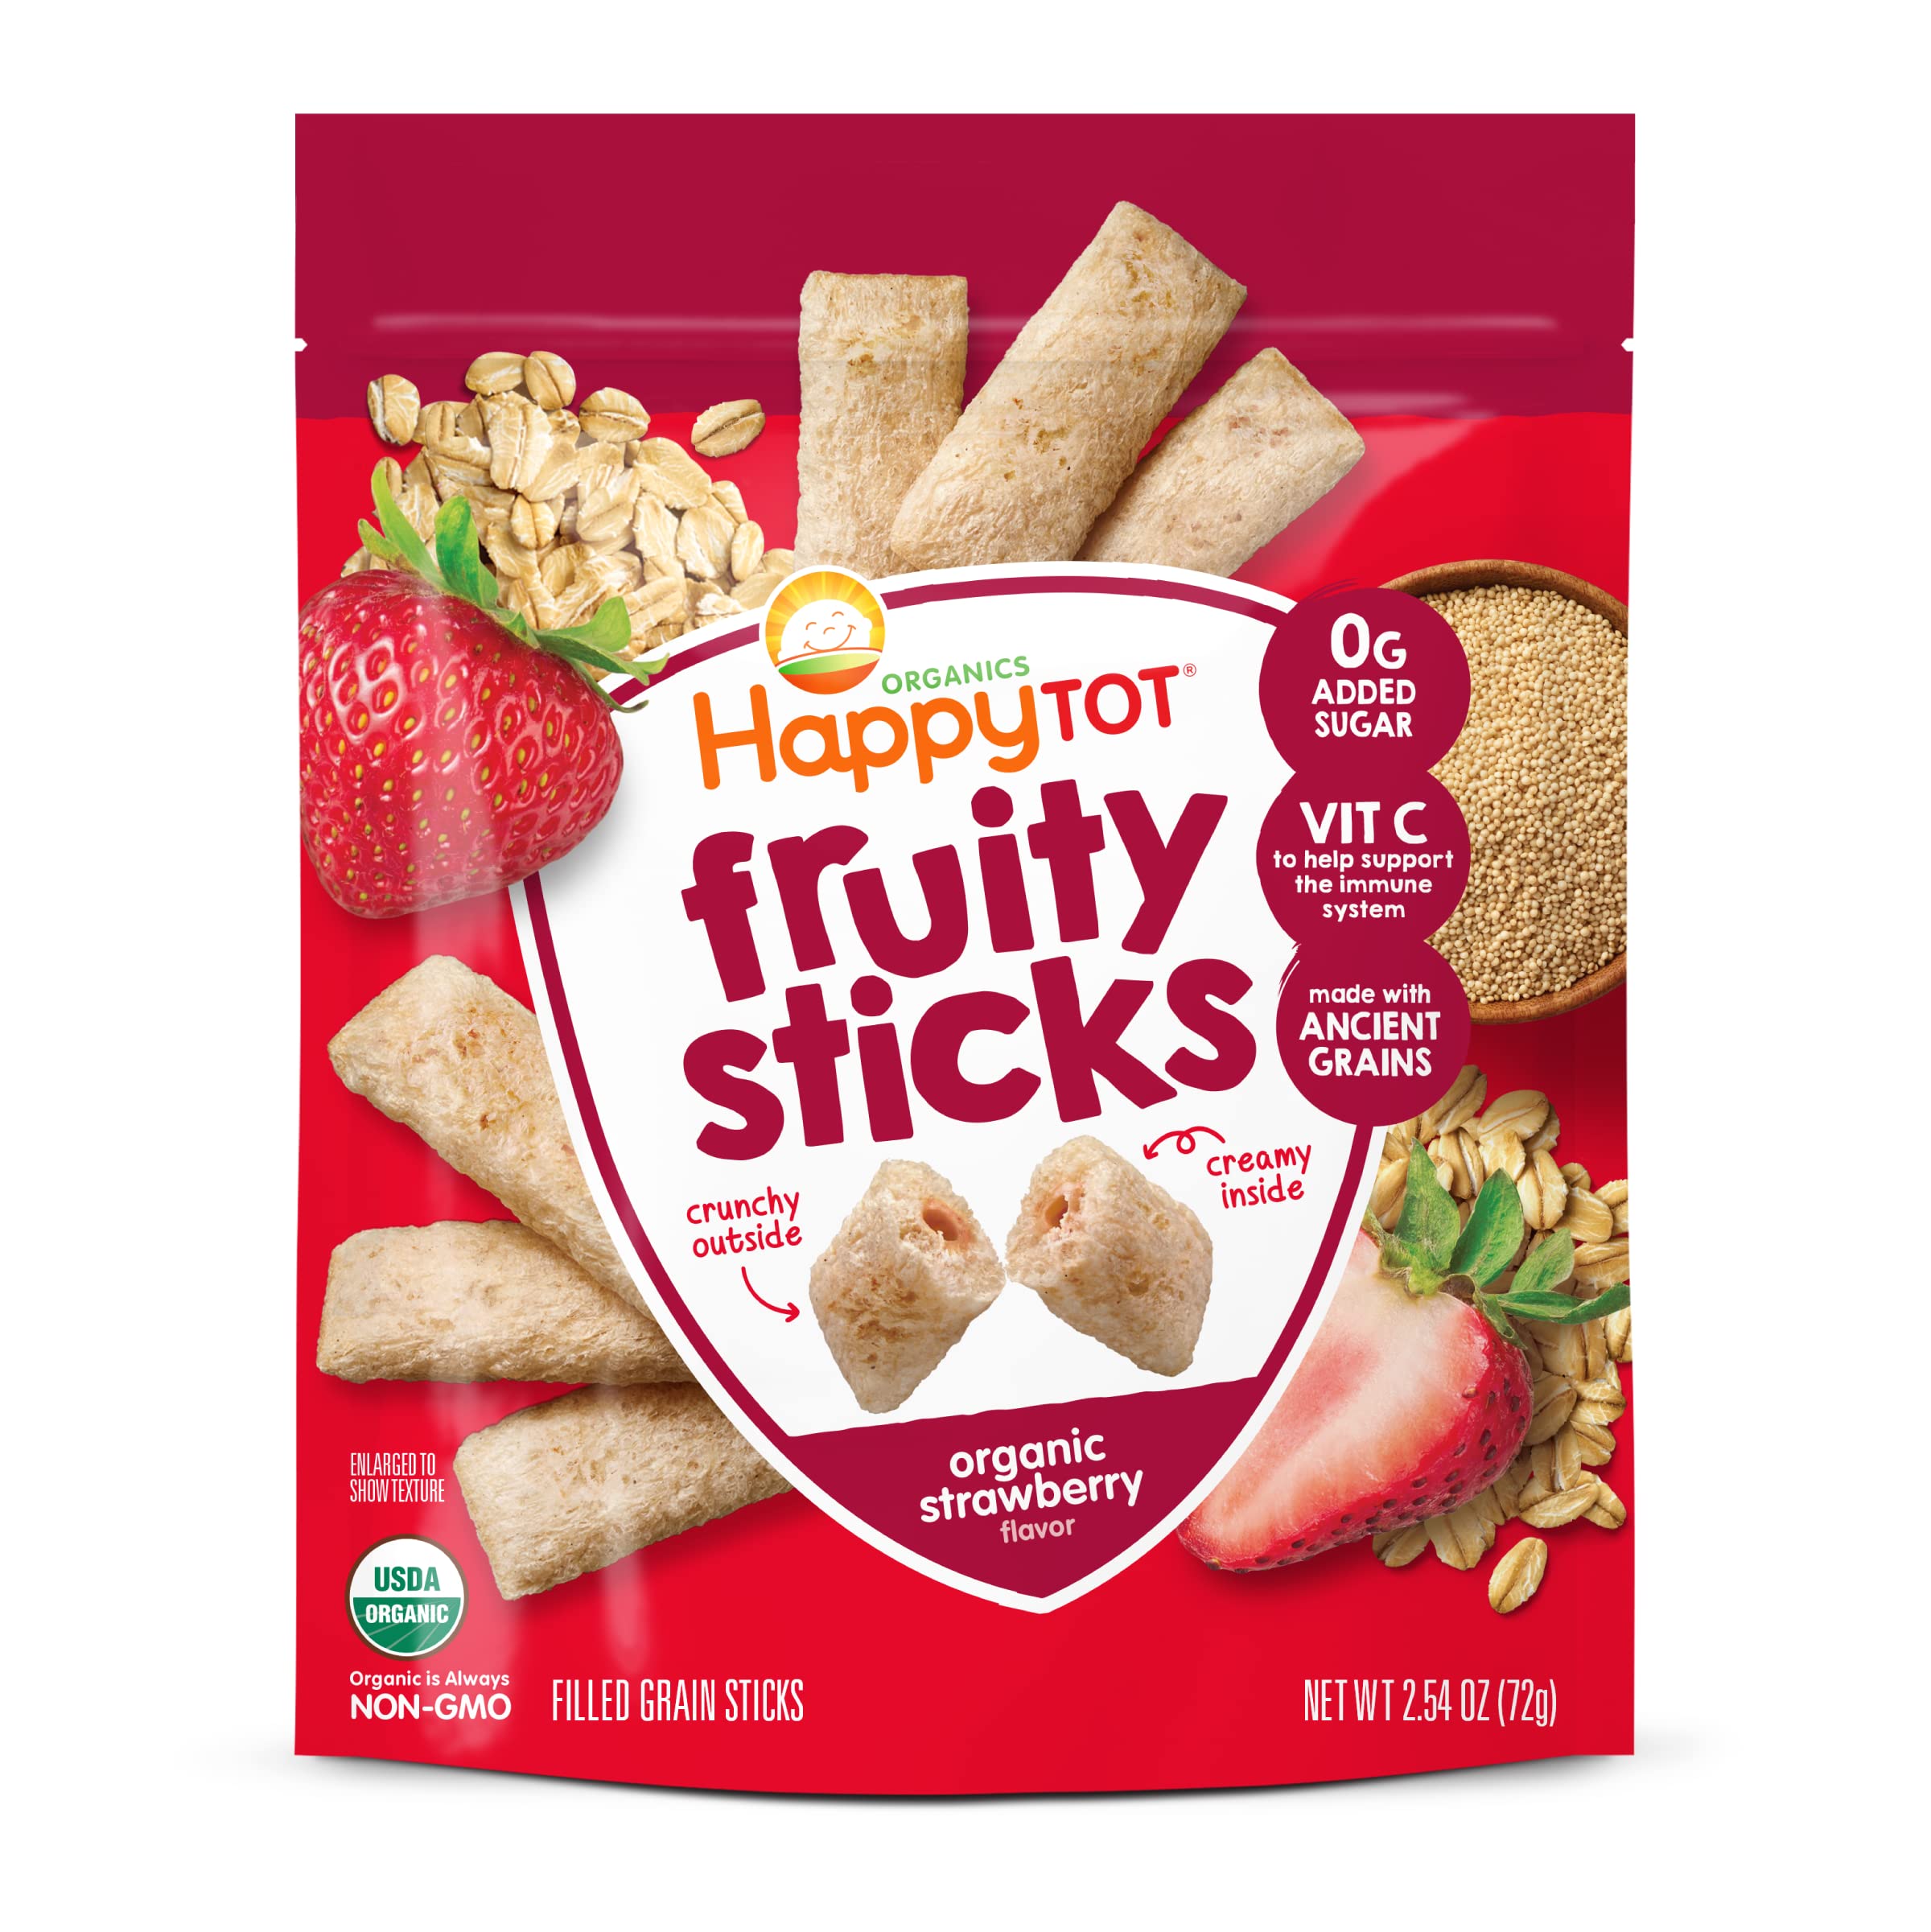 HAPPYTOT Organics Fruity Sticks, Oat & Fruit Filled Grain Sticks, Strawberry, Organic Toddler Snack, 2.5 Ounce Bag (Pack of 6)